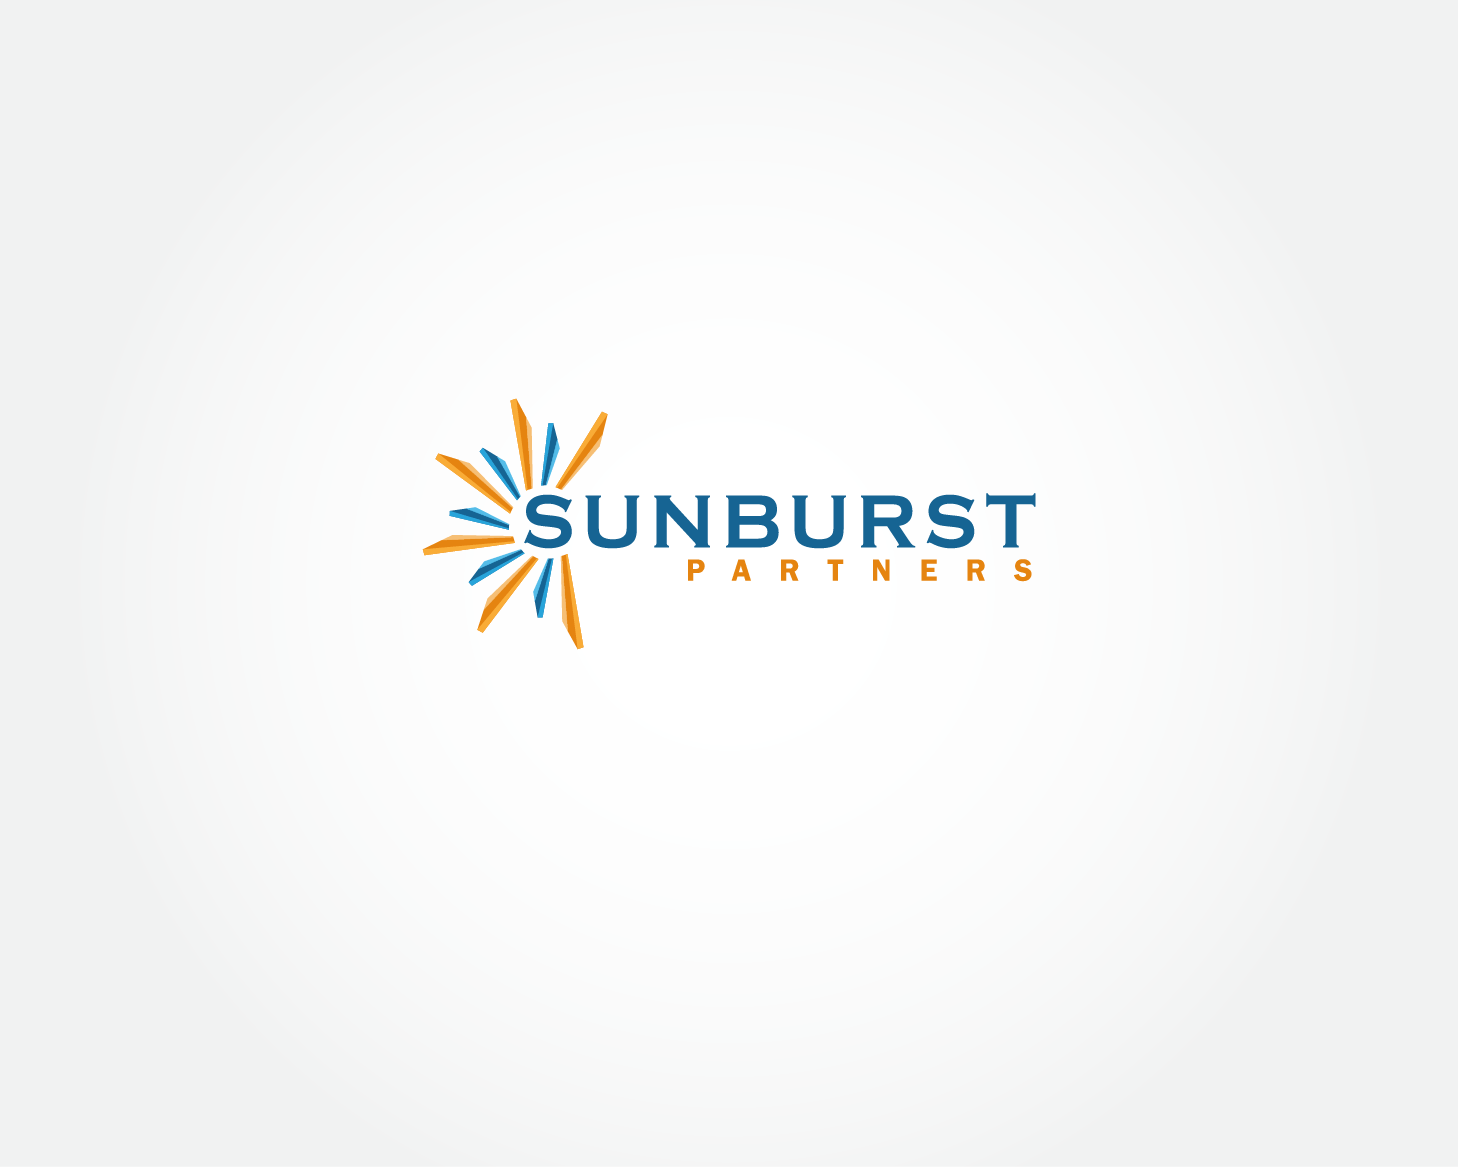 Sunburst Logo - Bold, Playful, Consulting Logo Design for Sunburst Partners by ...